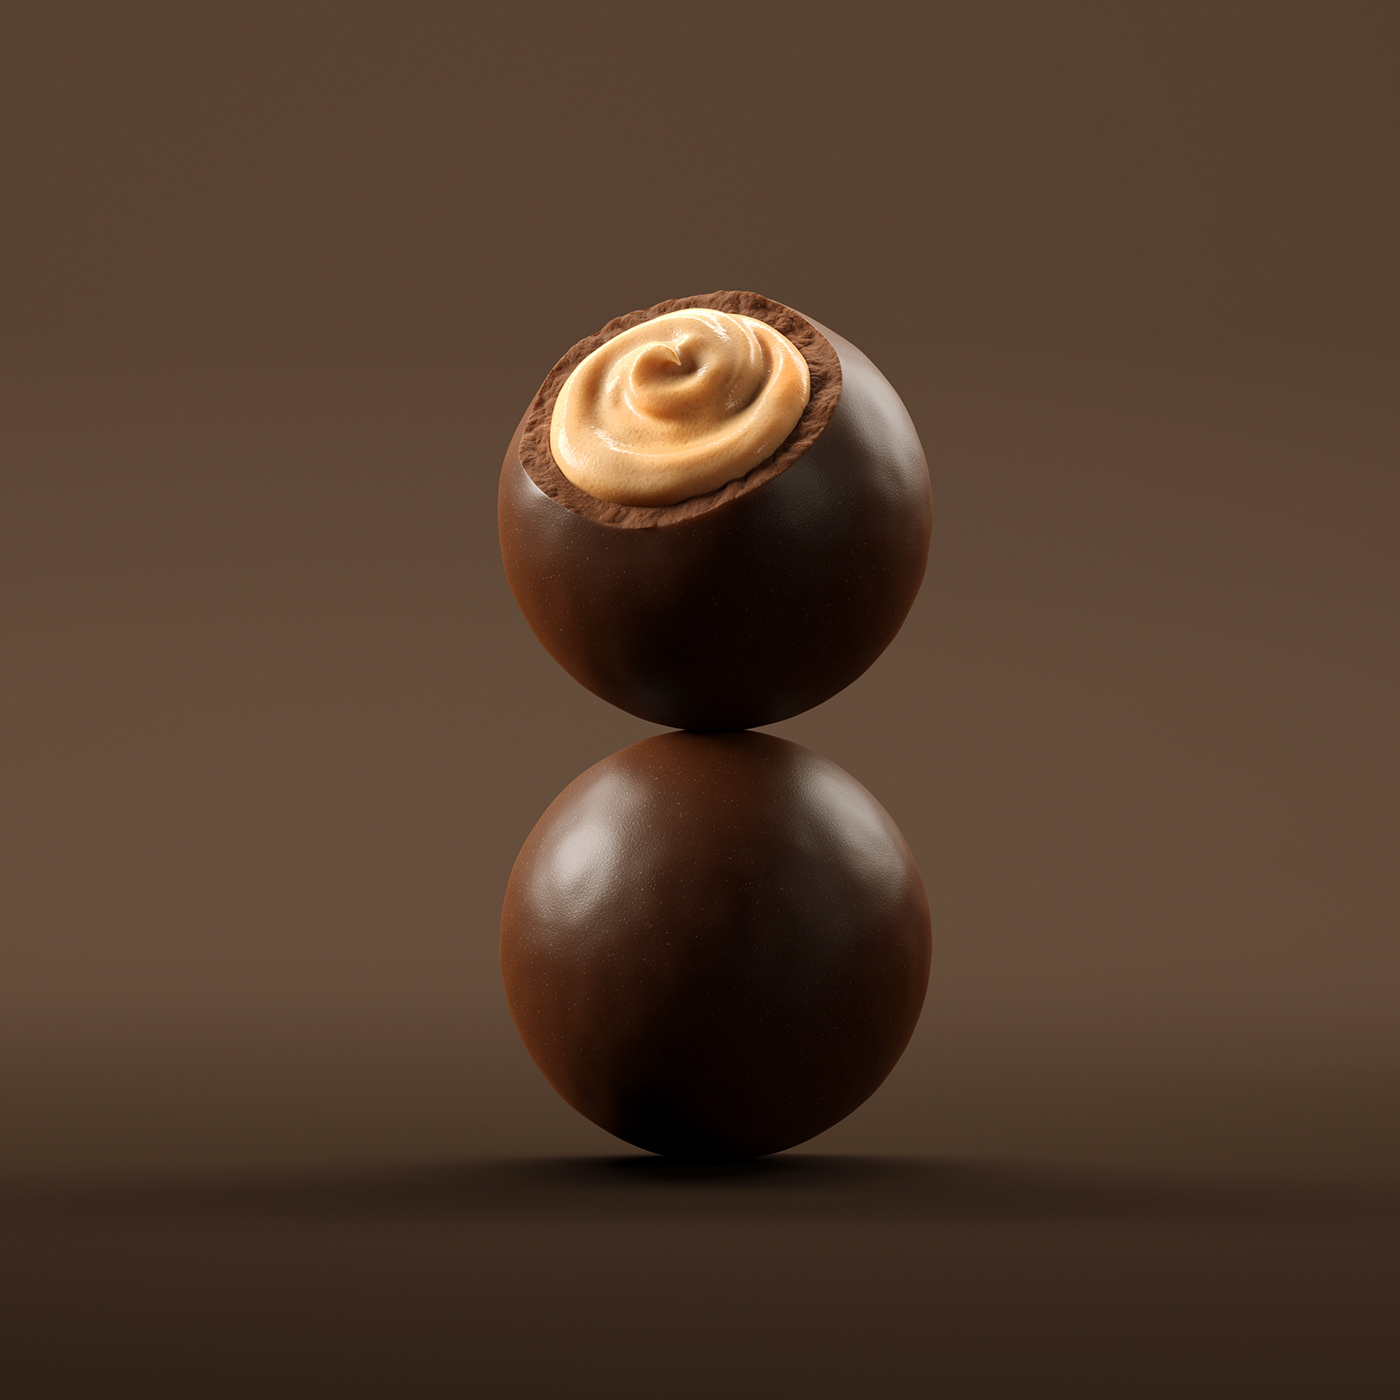 3D 3dFood Borges cgifood chocolate Food  pedro white chocolate